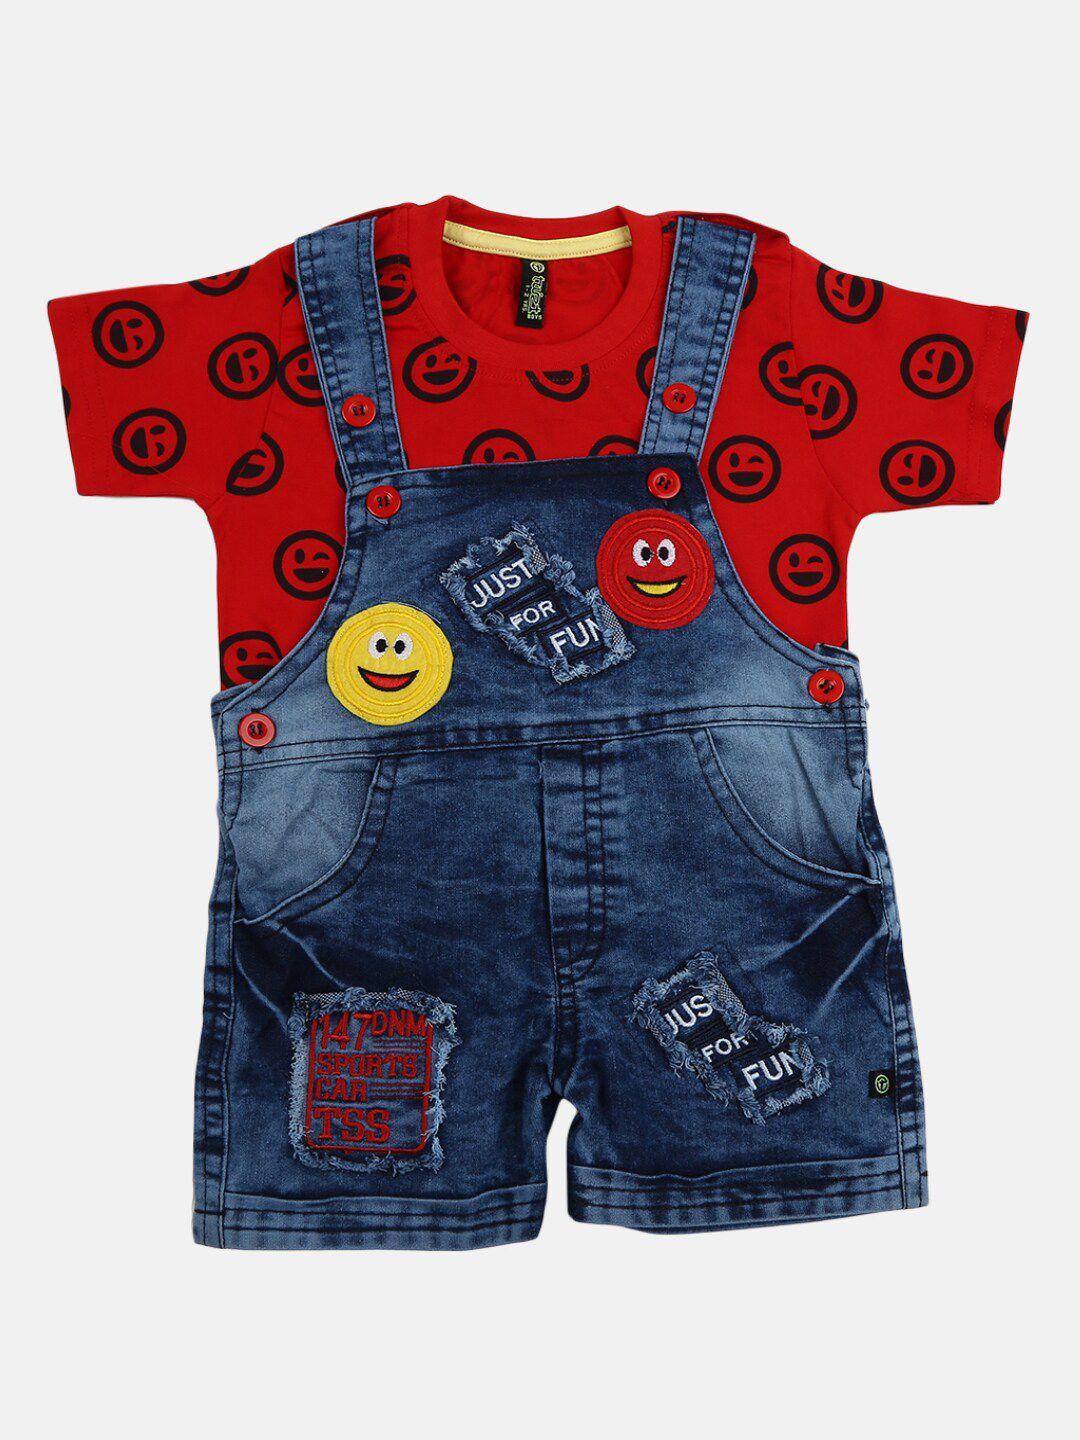 V-Mart Unisex Kids Red & Blue Printed T-shirt with Denim Dungaree Shorts